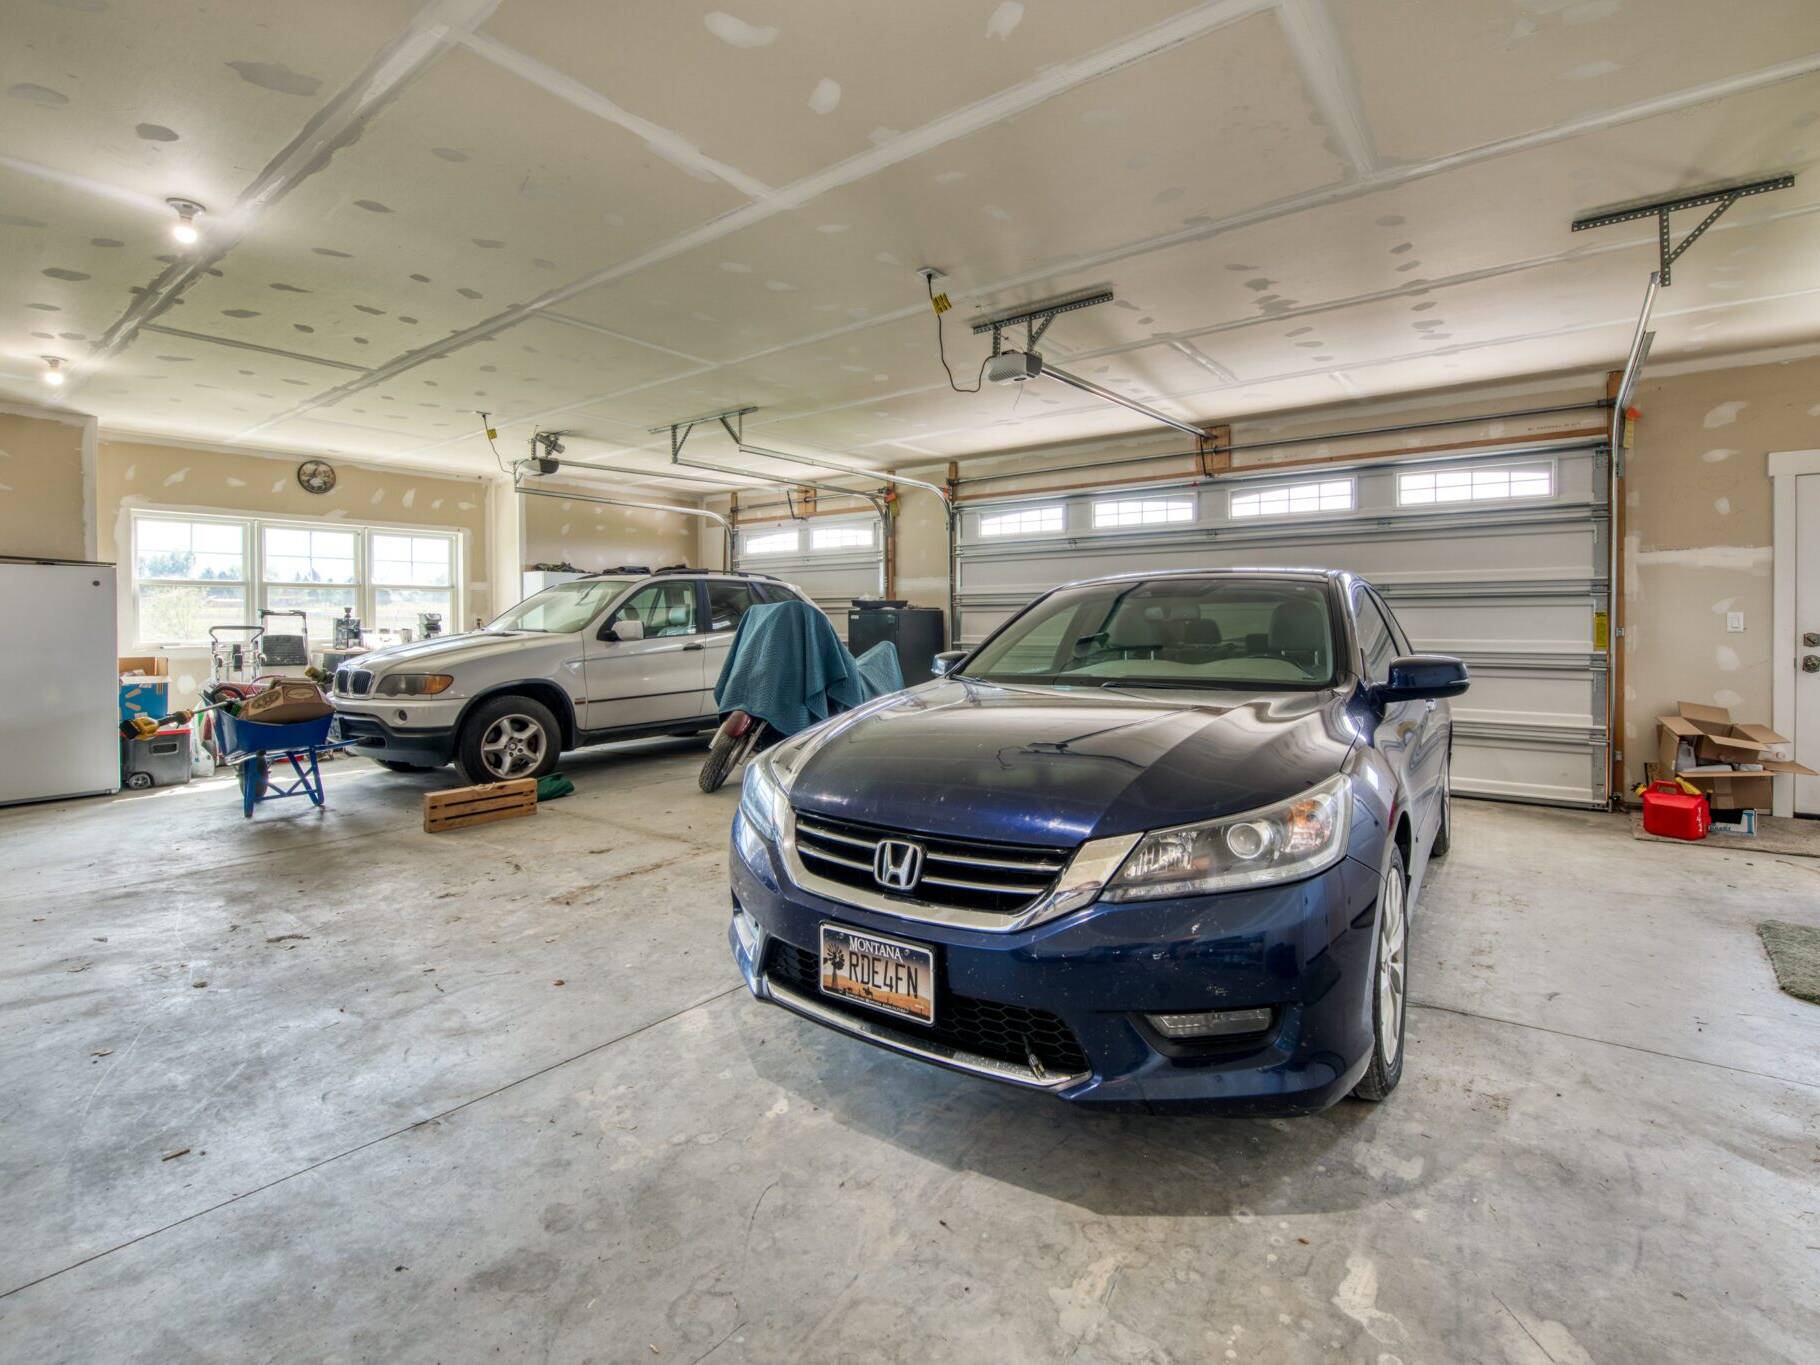 Garage in a custom home built by Big Sky Builders in Stevensville, MT